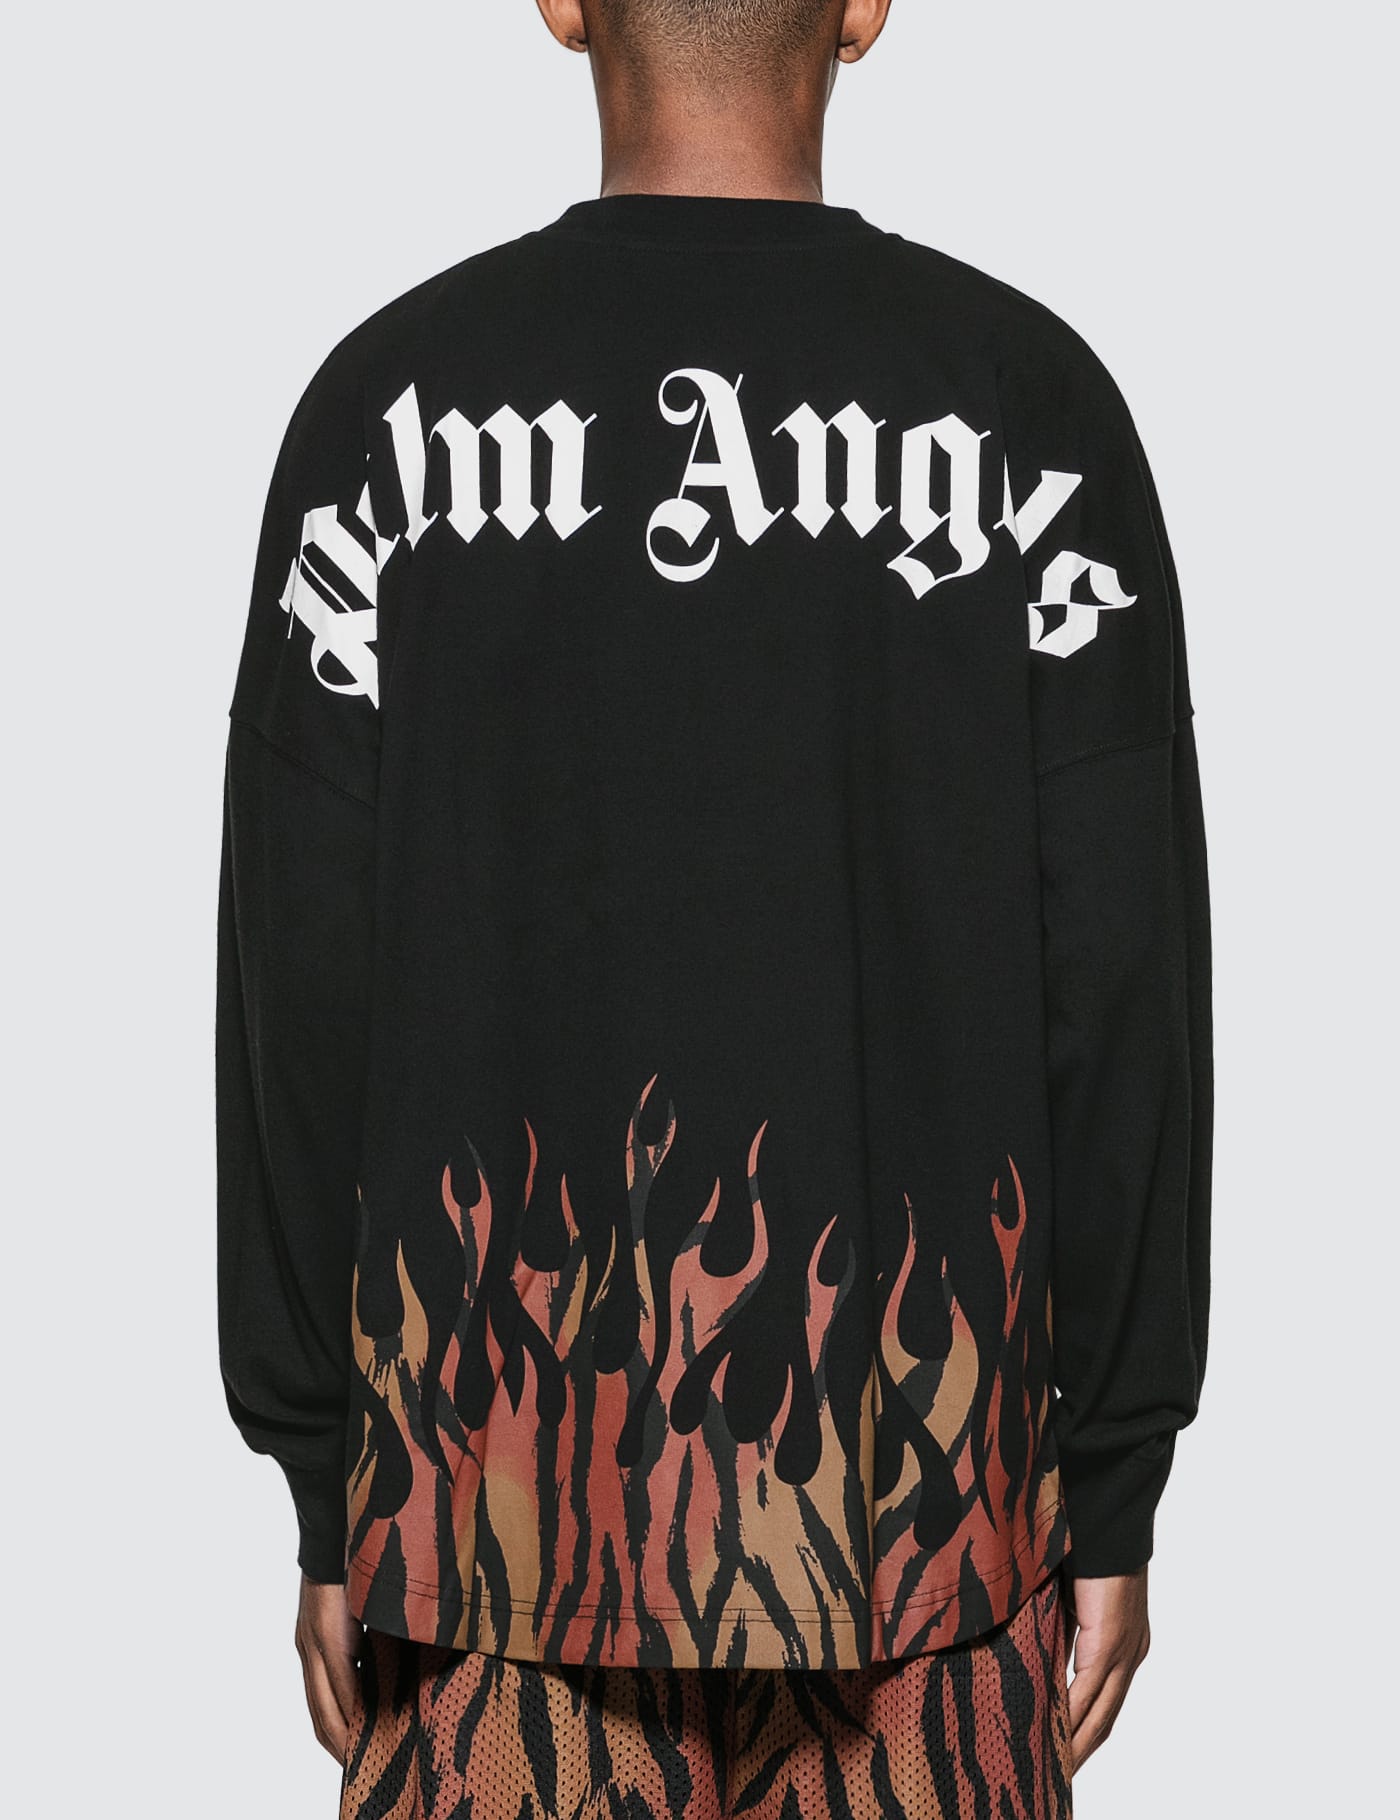 Palm Angels - Tiger Flames Logo Over Long Sleeve T-Shirt | HBX